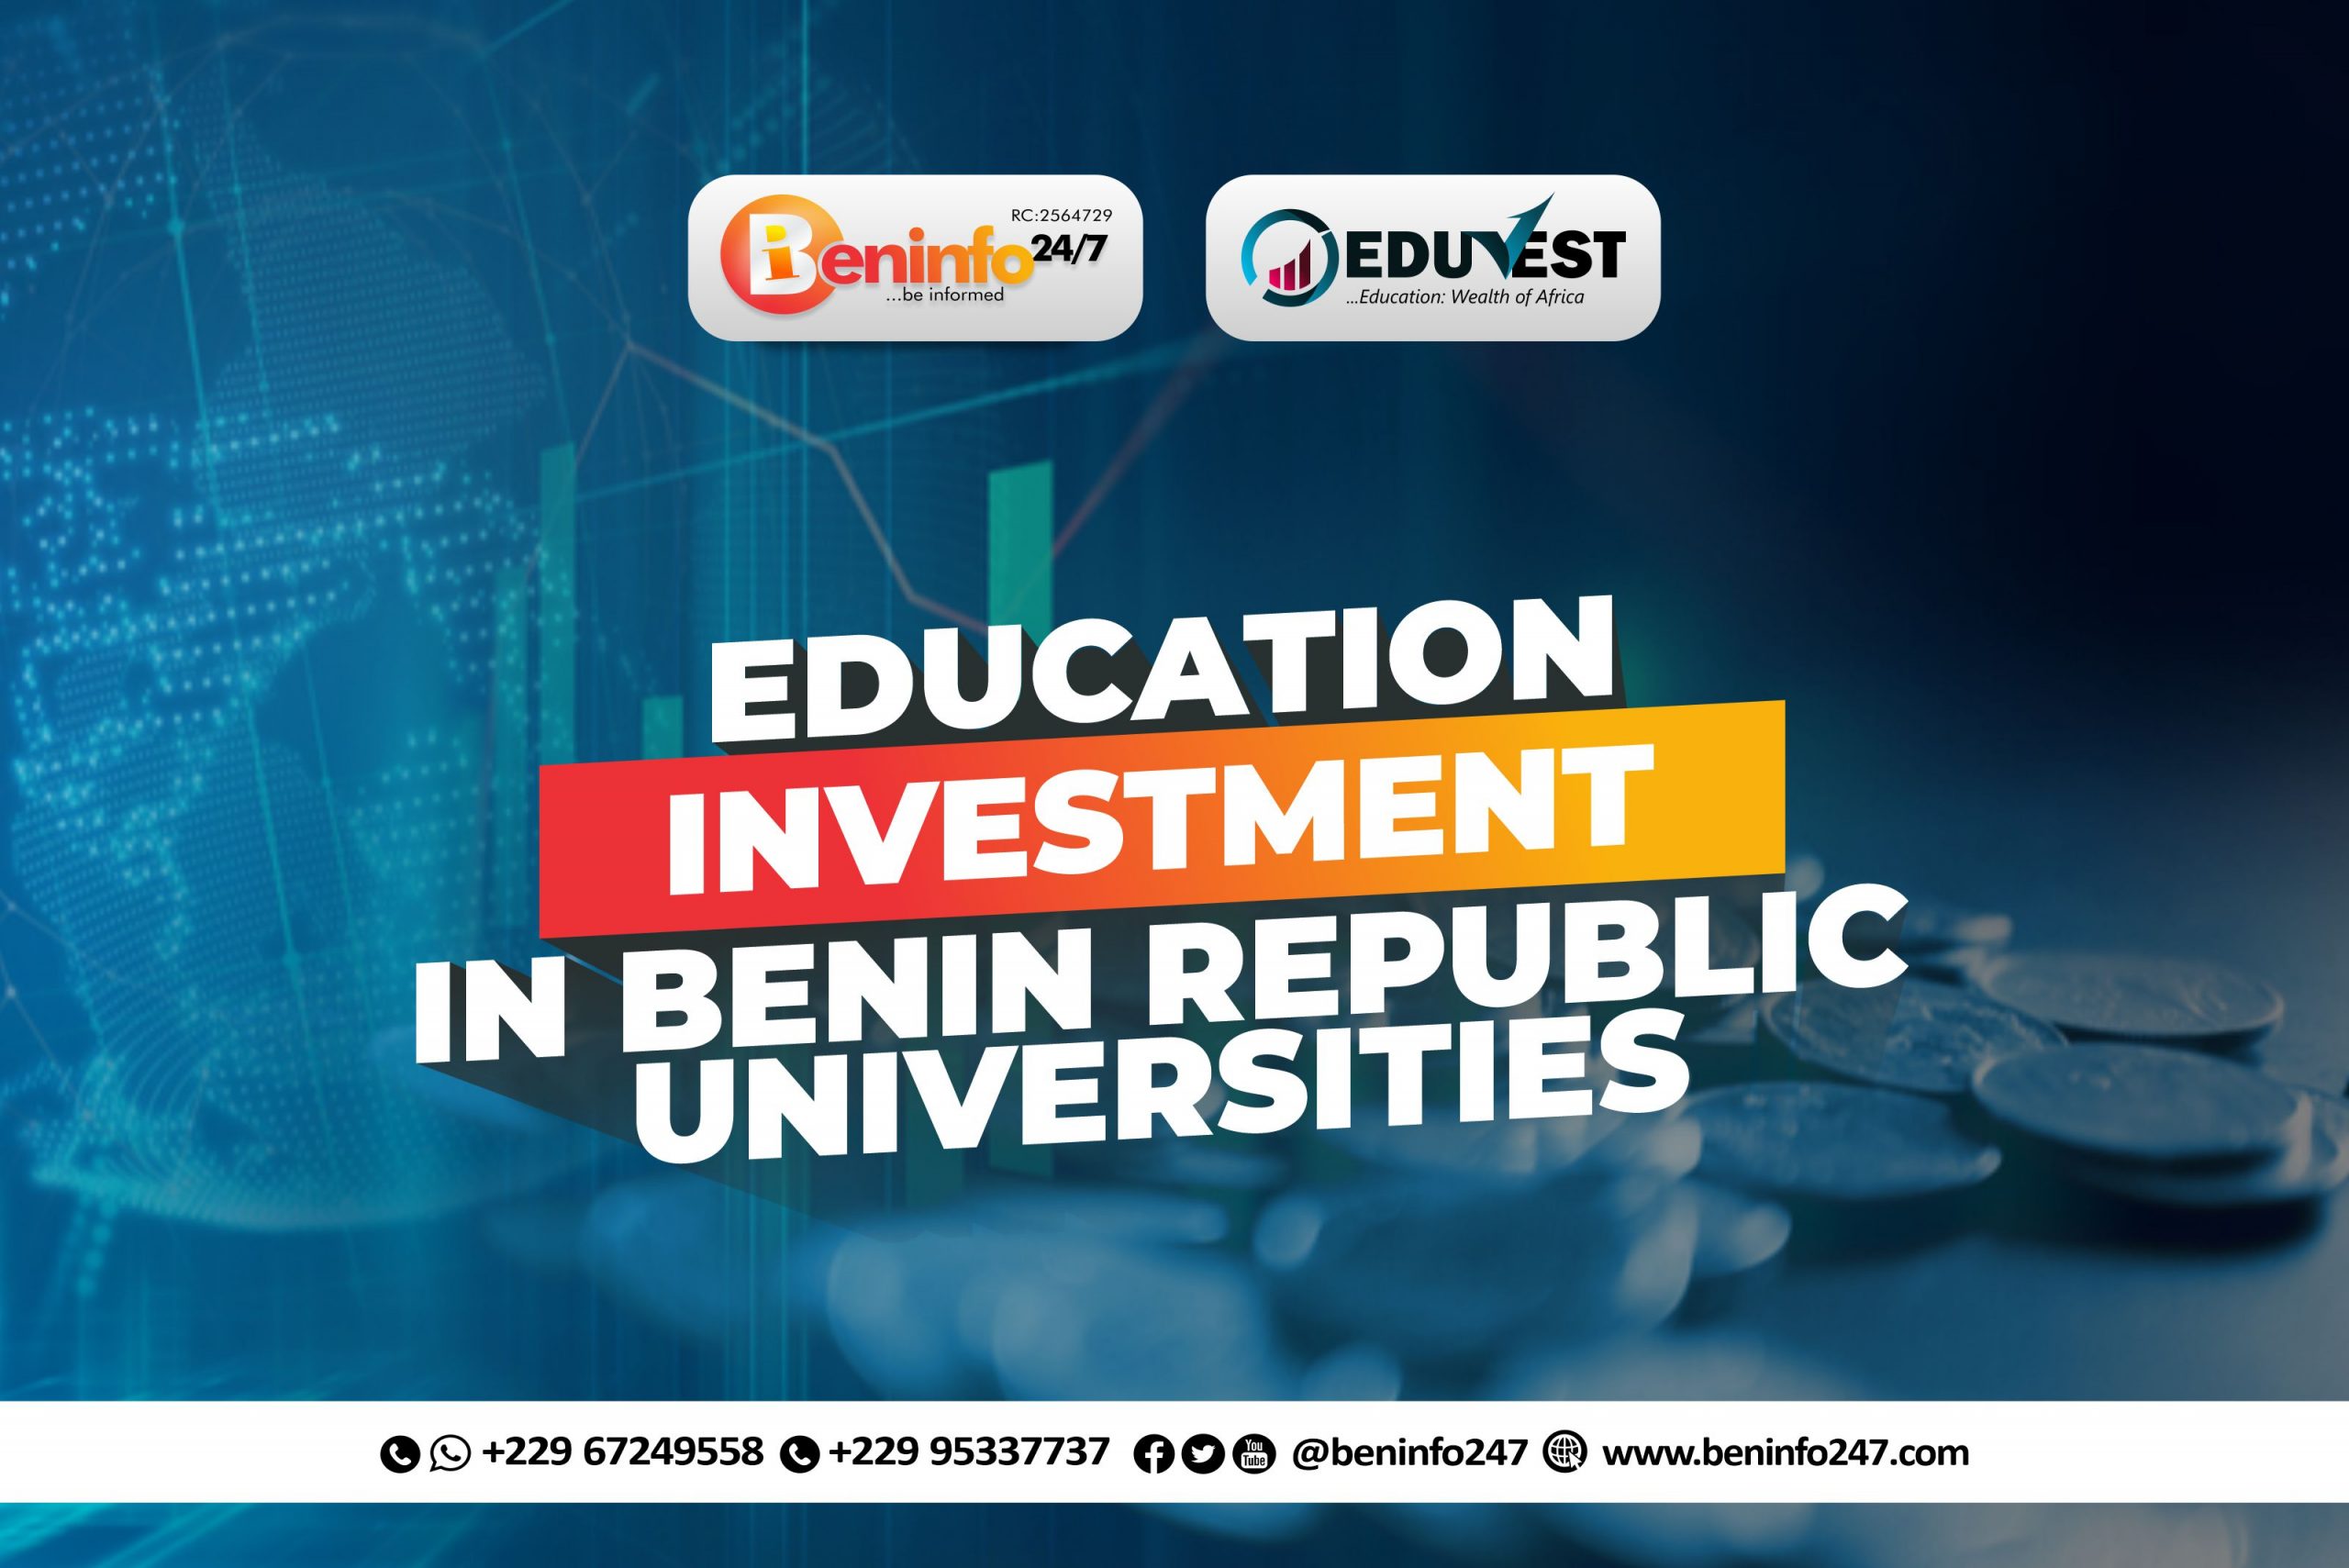 BENIN REPUBLIC UNIVERSITY EDUCATION INVESTMENT